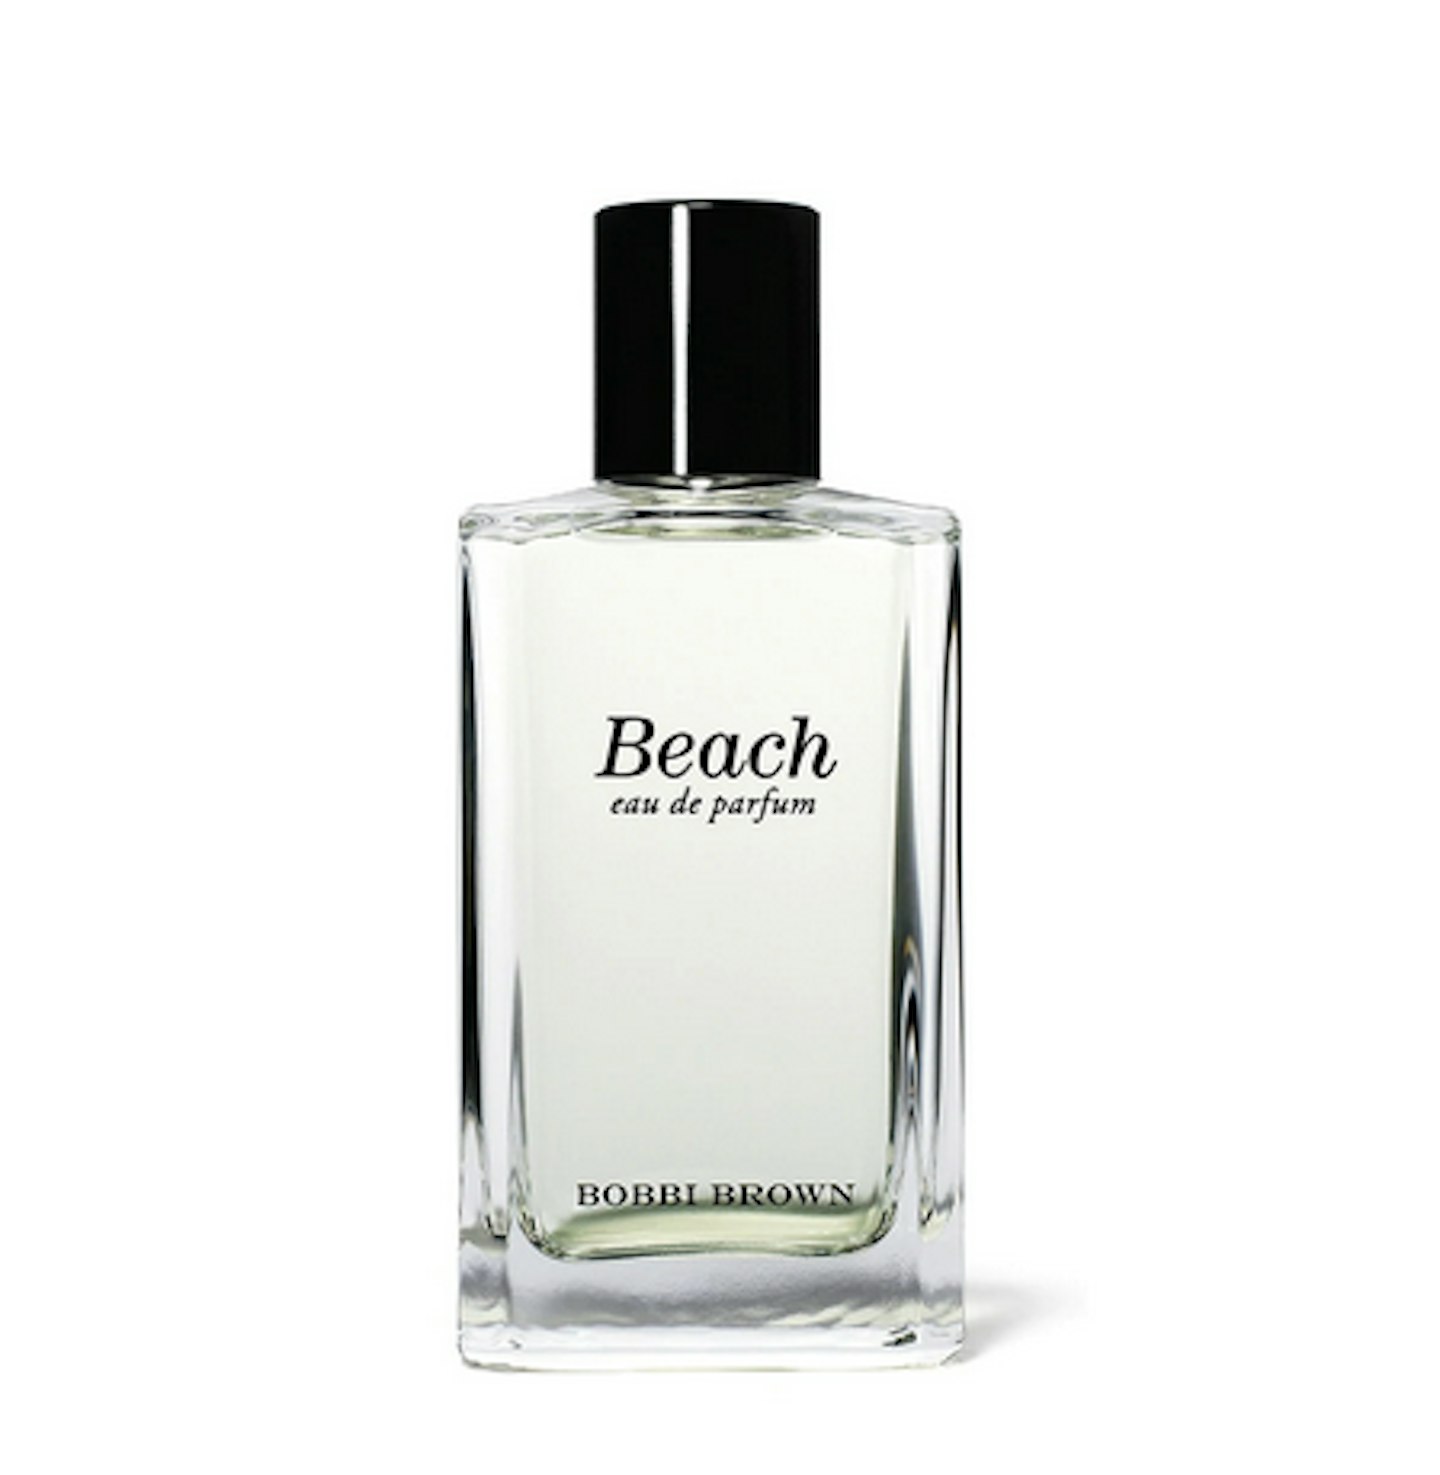 Bobbi Brown Beach Eau de Parfum, £52